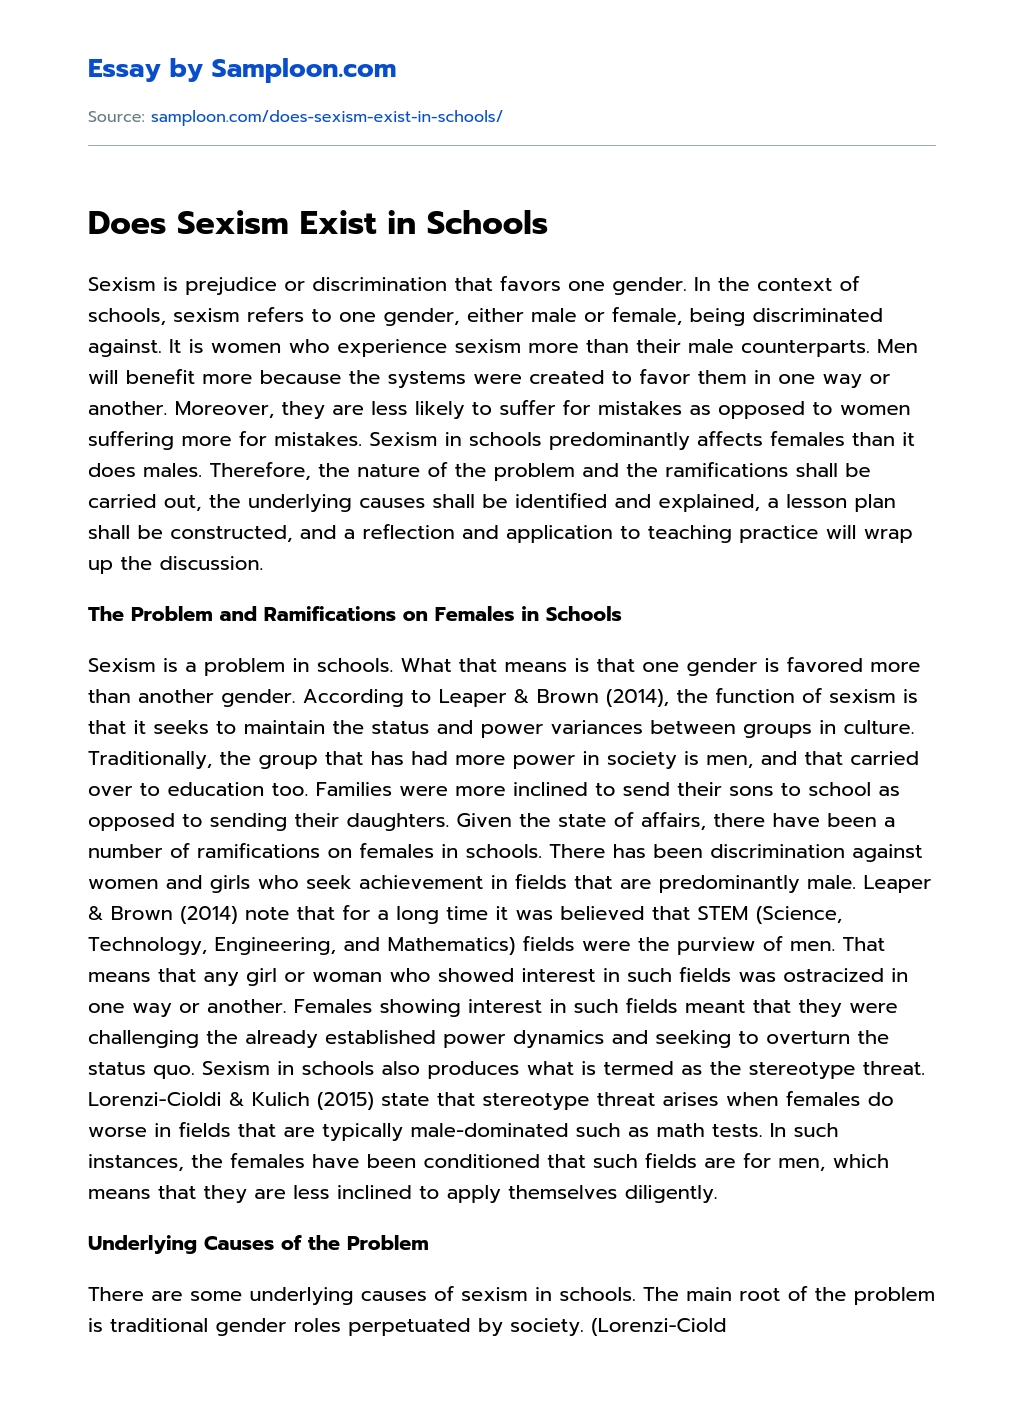 Does Sexism Exist in Schools essay